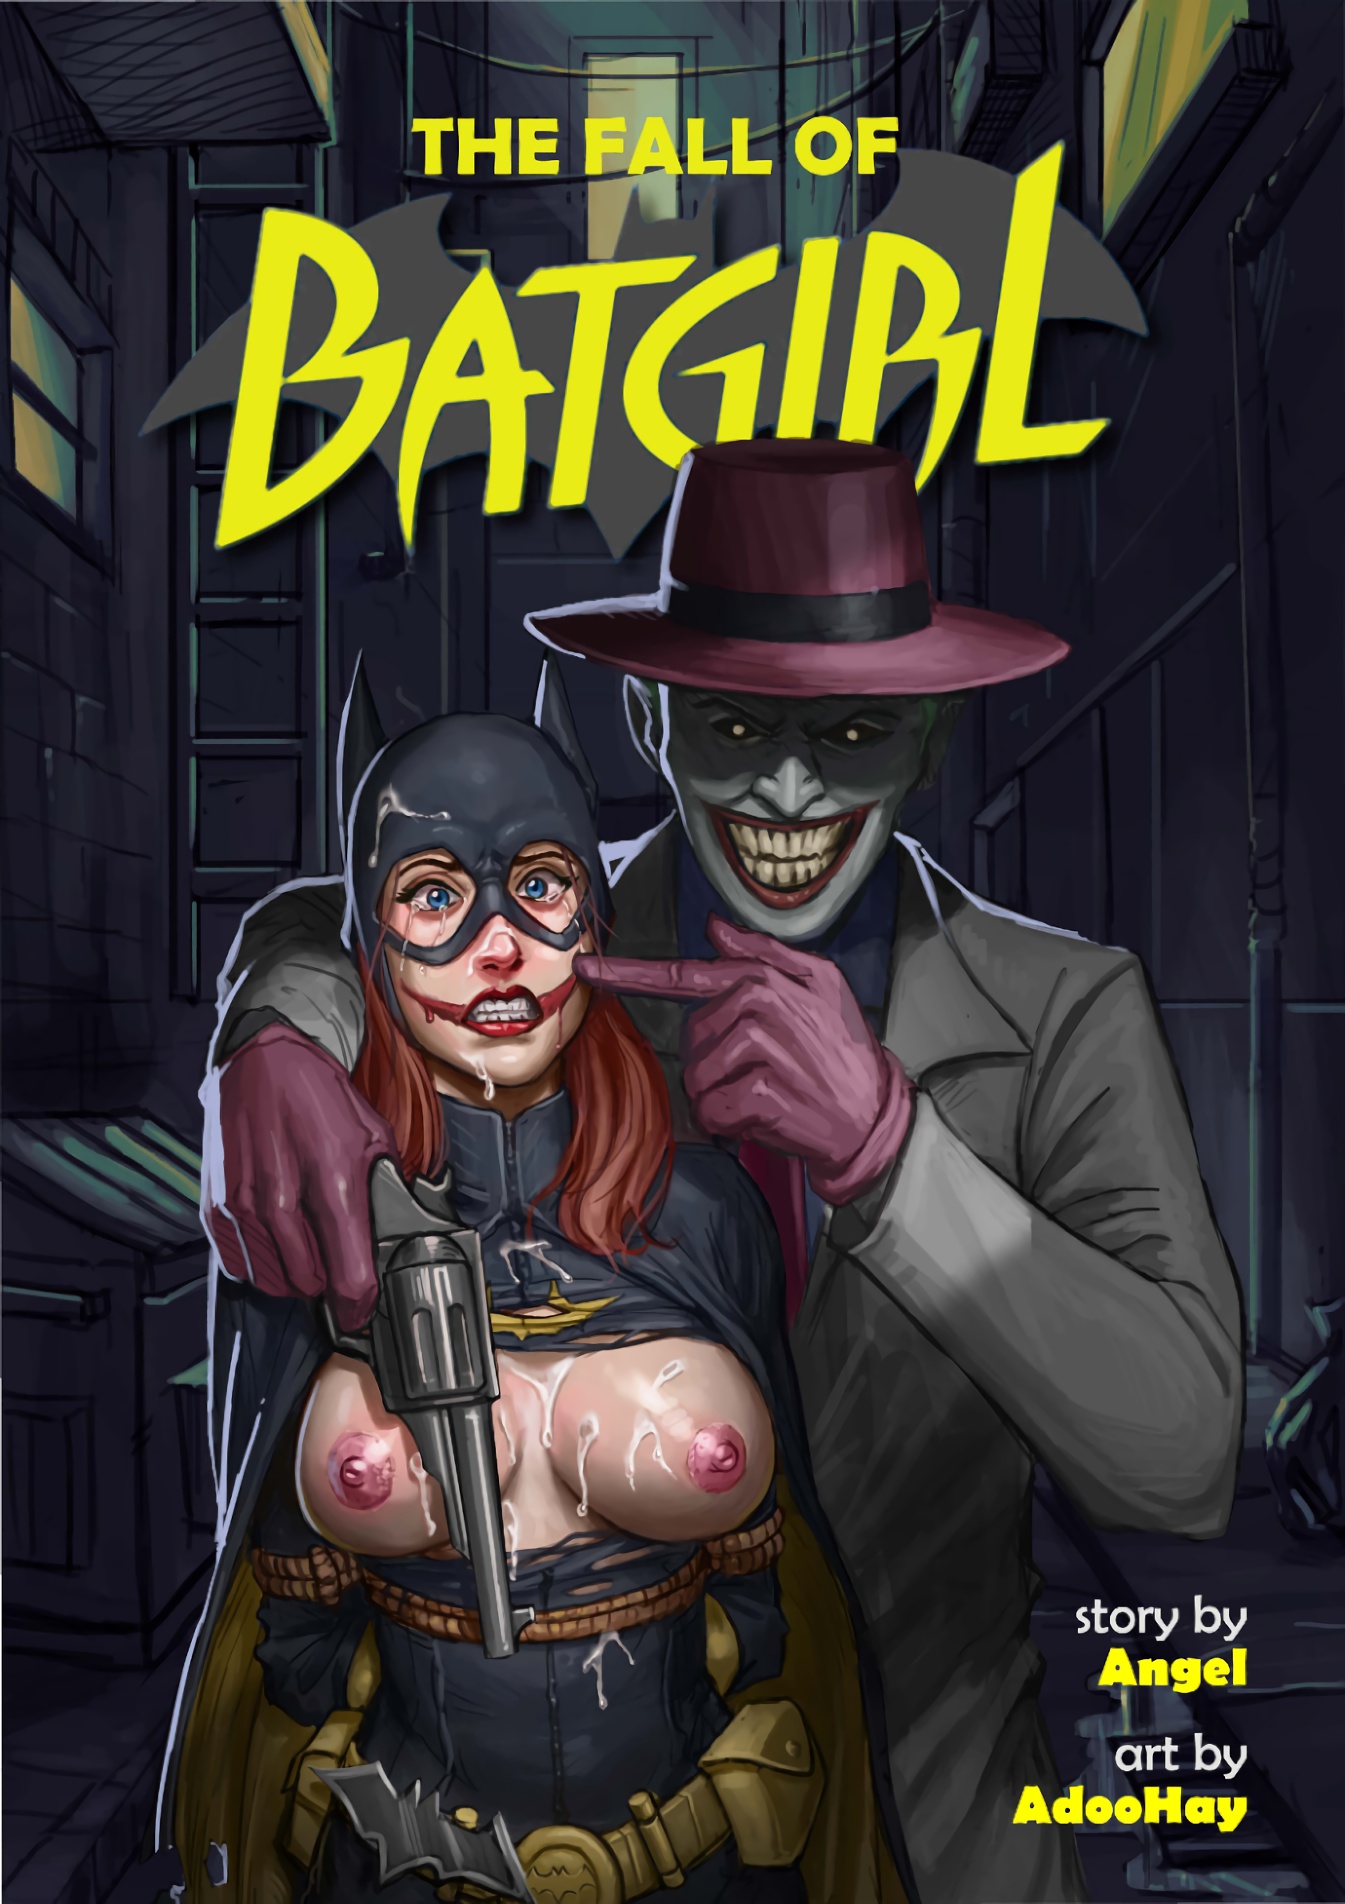 The Fall of Batgirl (batman) porn comic by [adoohay]. Anal porn comics.